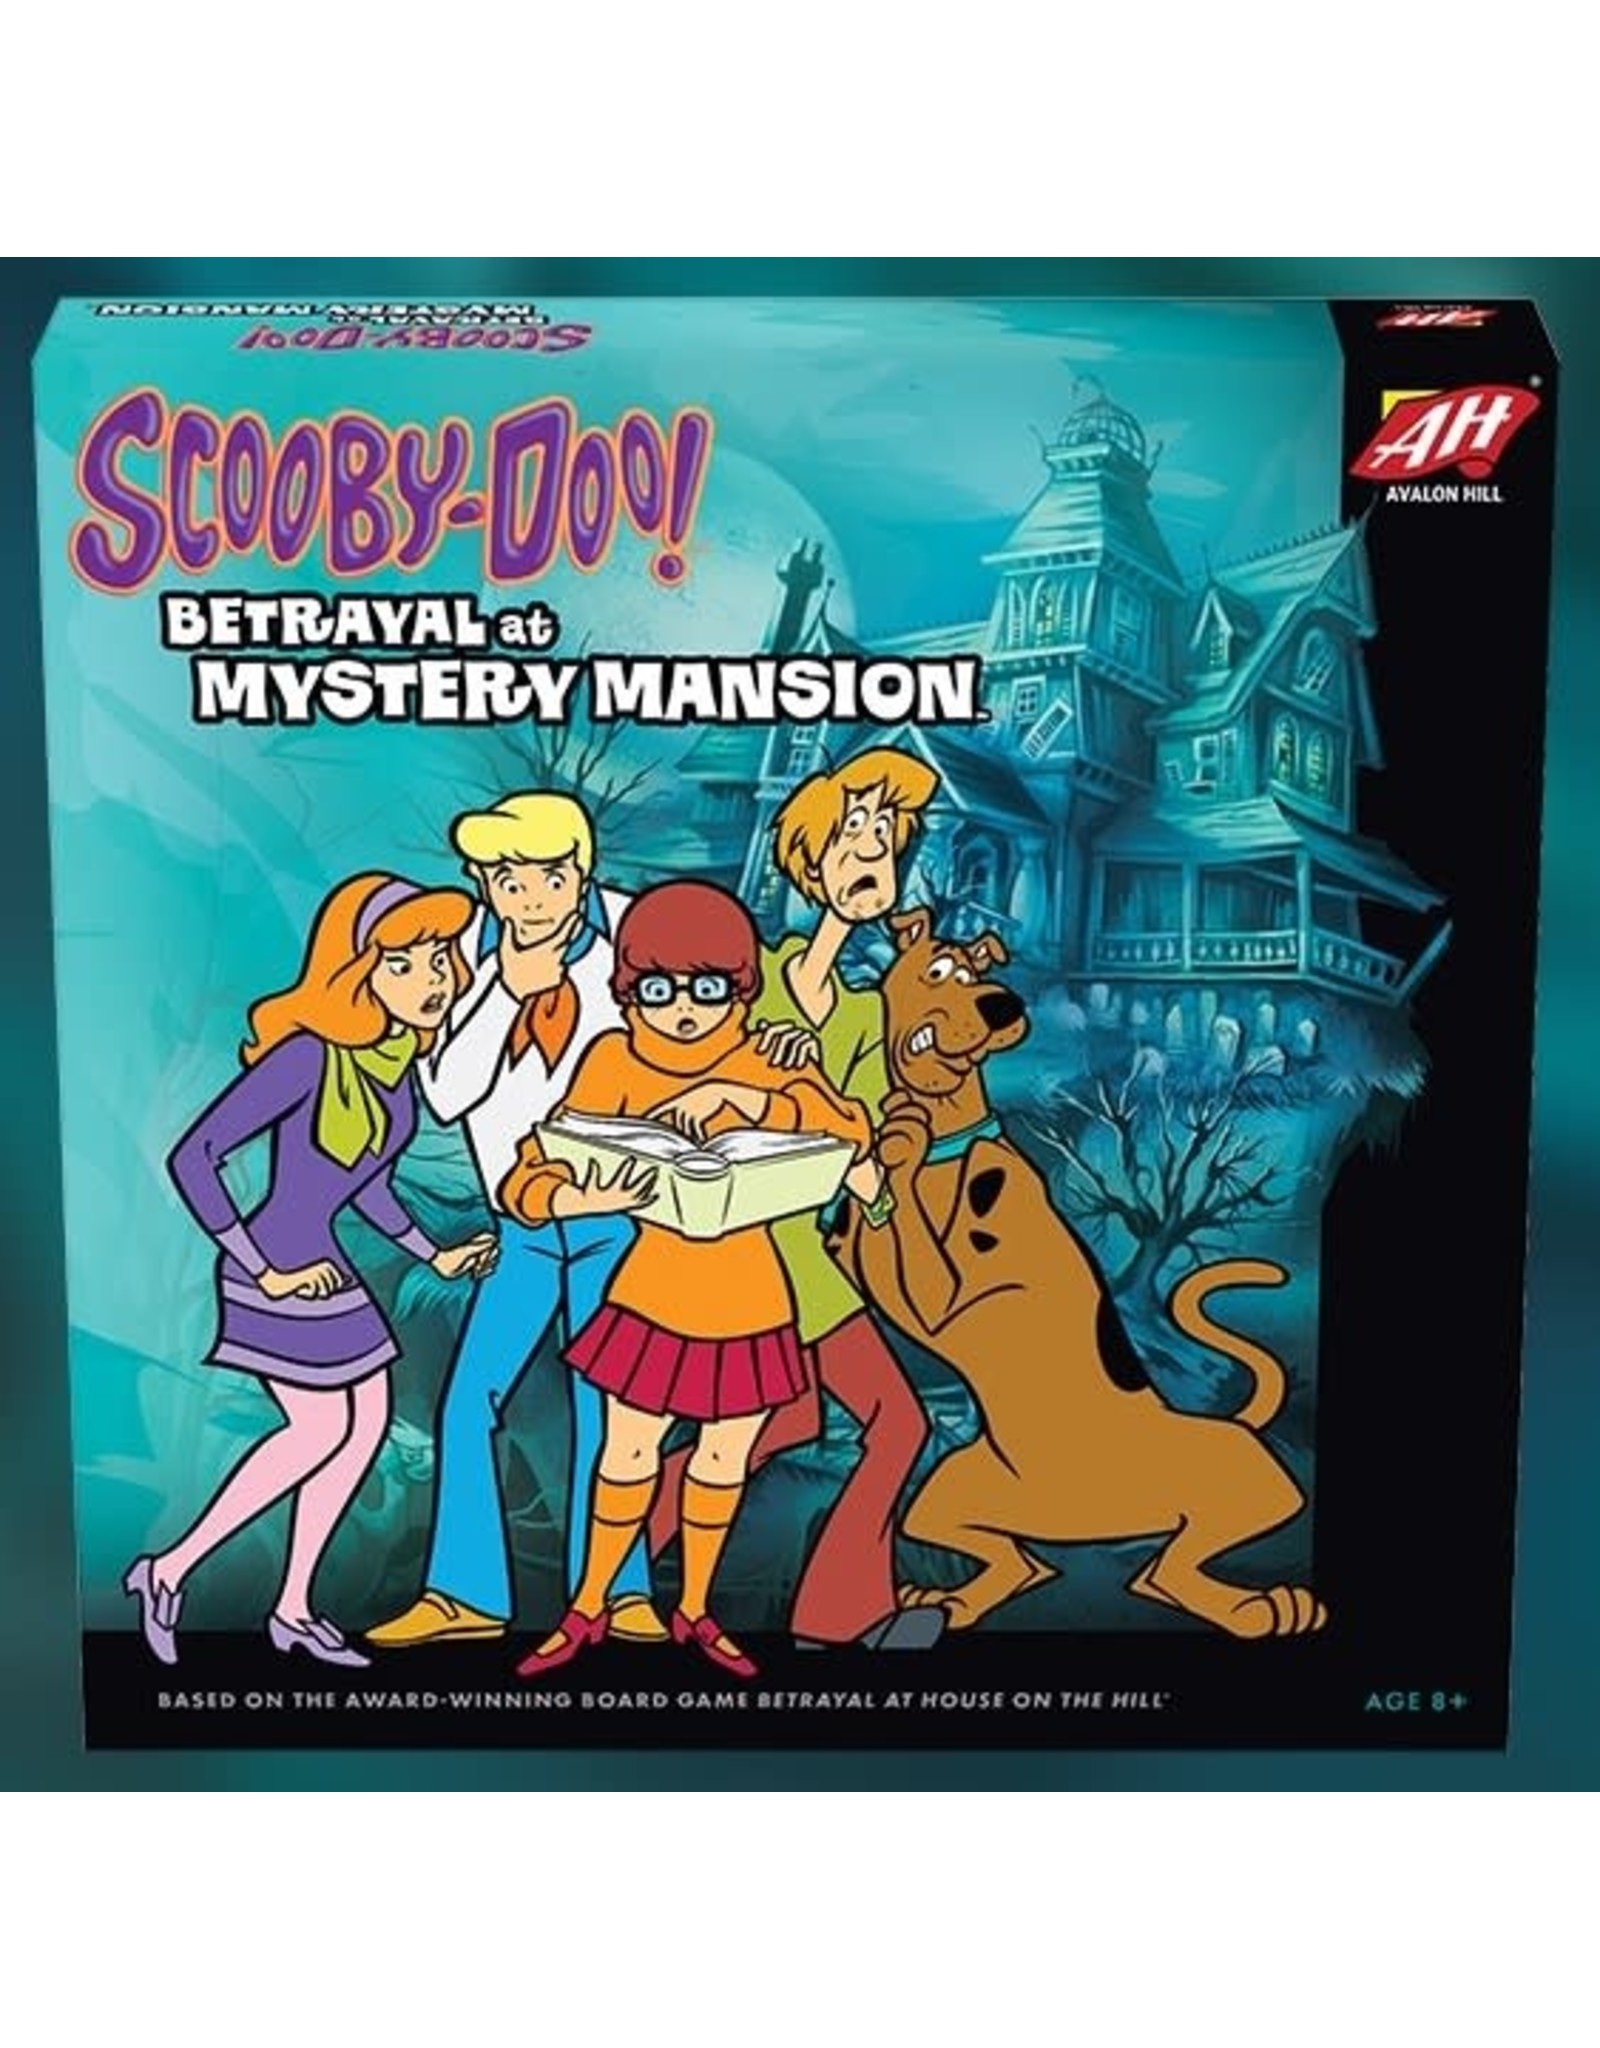 Avalon Hill Betrayal at Mystery Mansion